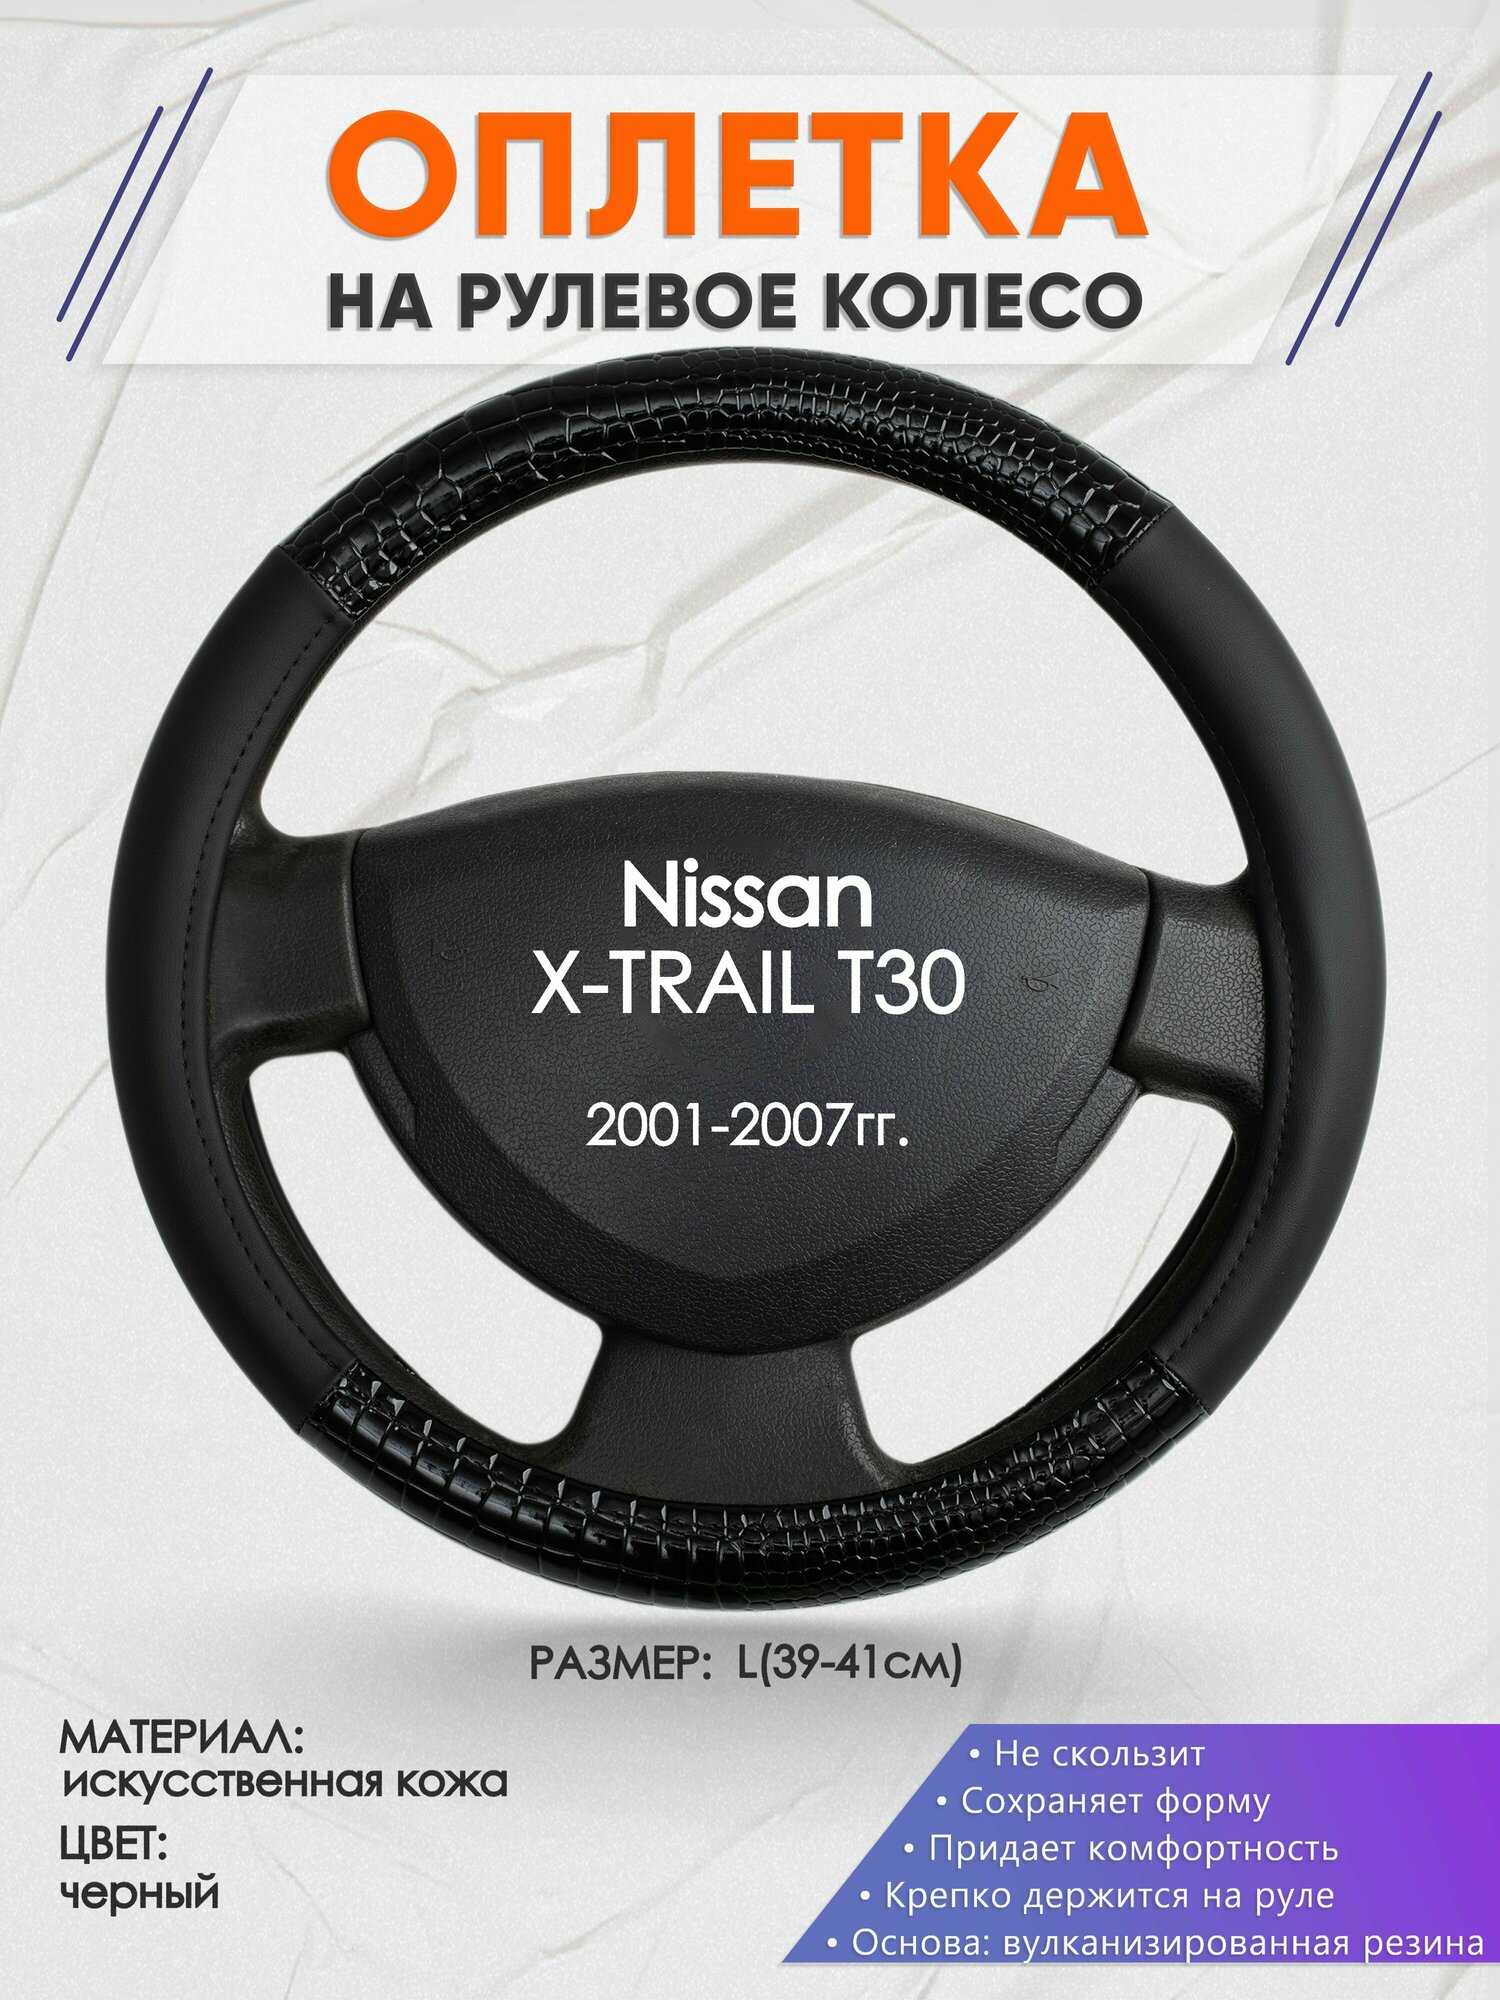 Оплетка на руль для Nissan X-TRAIL T30(Ниссан Икс Трейл) 2001-2007, L(39-41см), Искусственная кожа 83